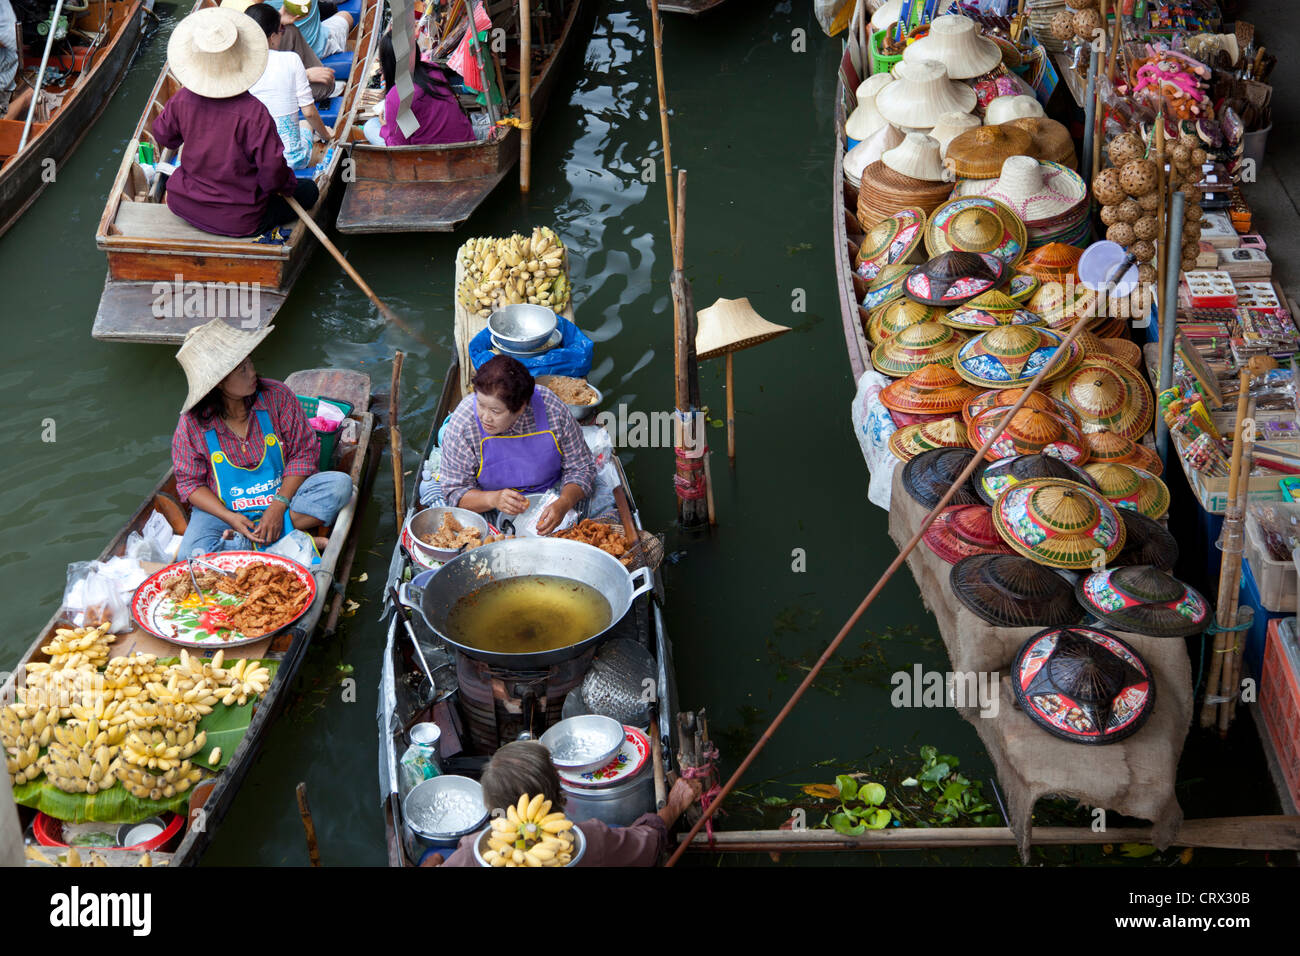 The Damnoen Saduak floating market, a major tourist destination in Thailand. Le marché flottant de Damnoen Saduak en Thaïlande. Stock Photo